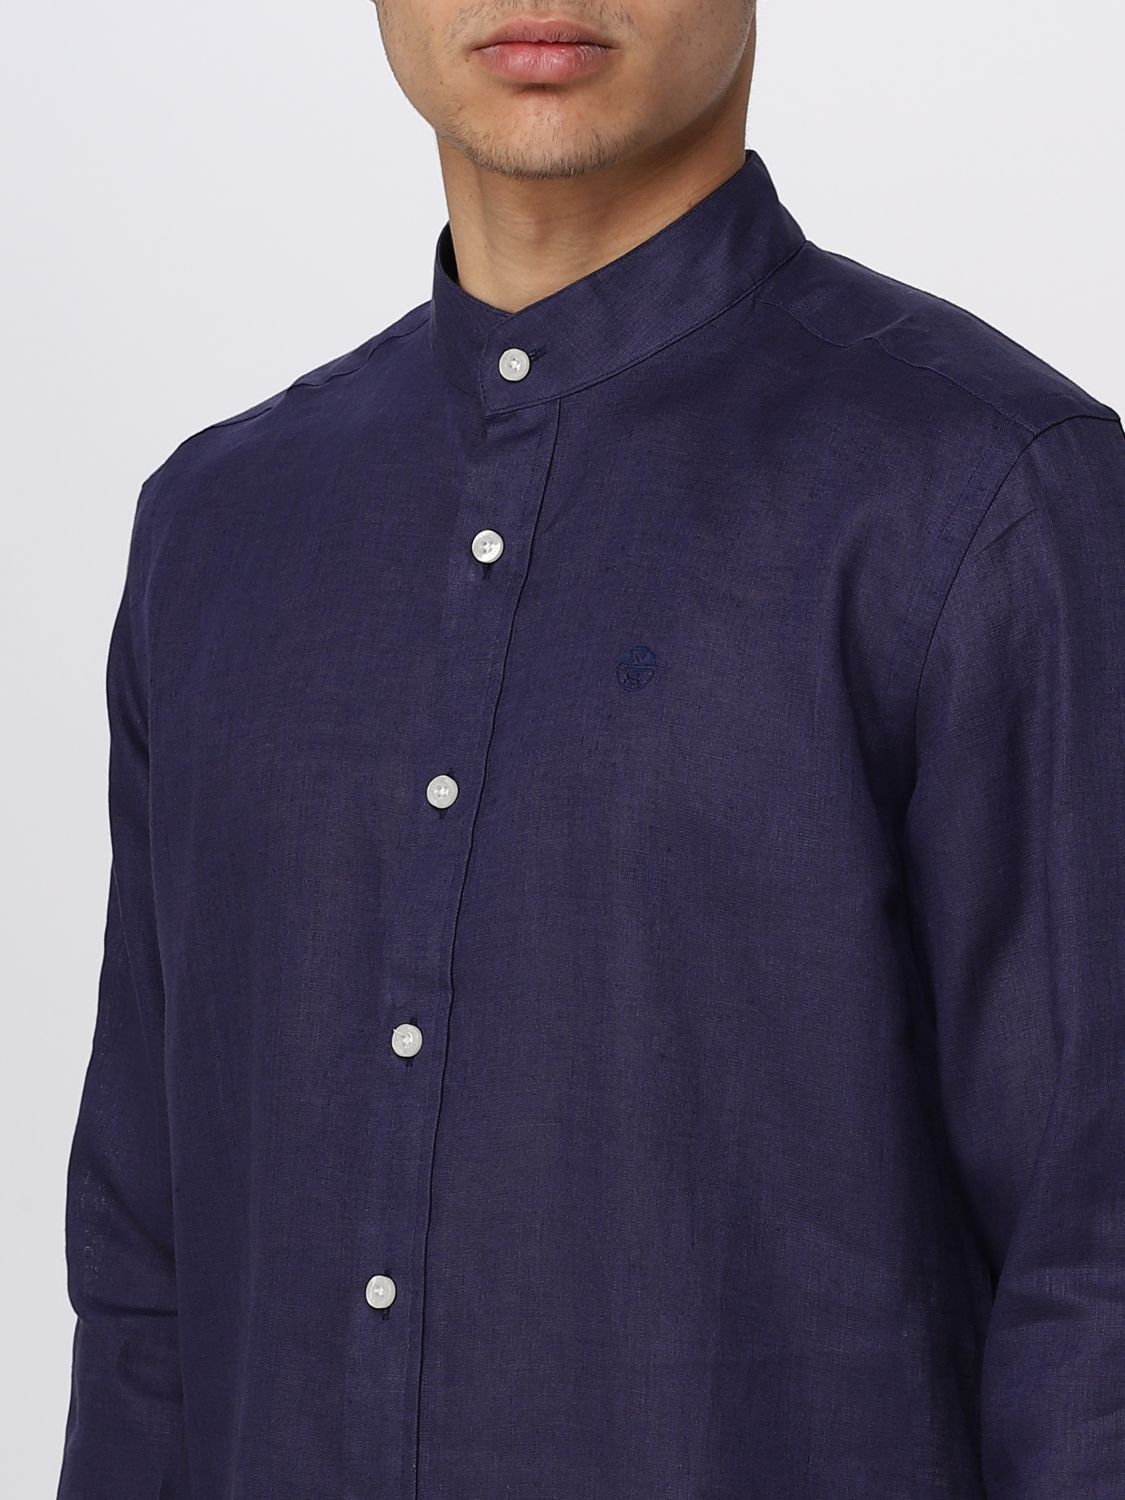 NORTH SAILS: shirt for man - Blue | North Sails shirt 664116 online on ...